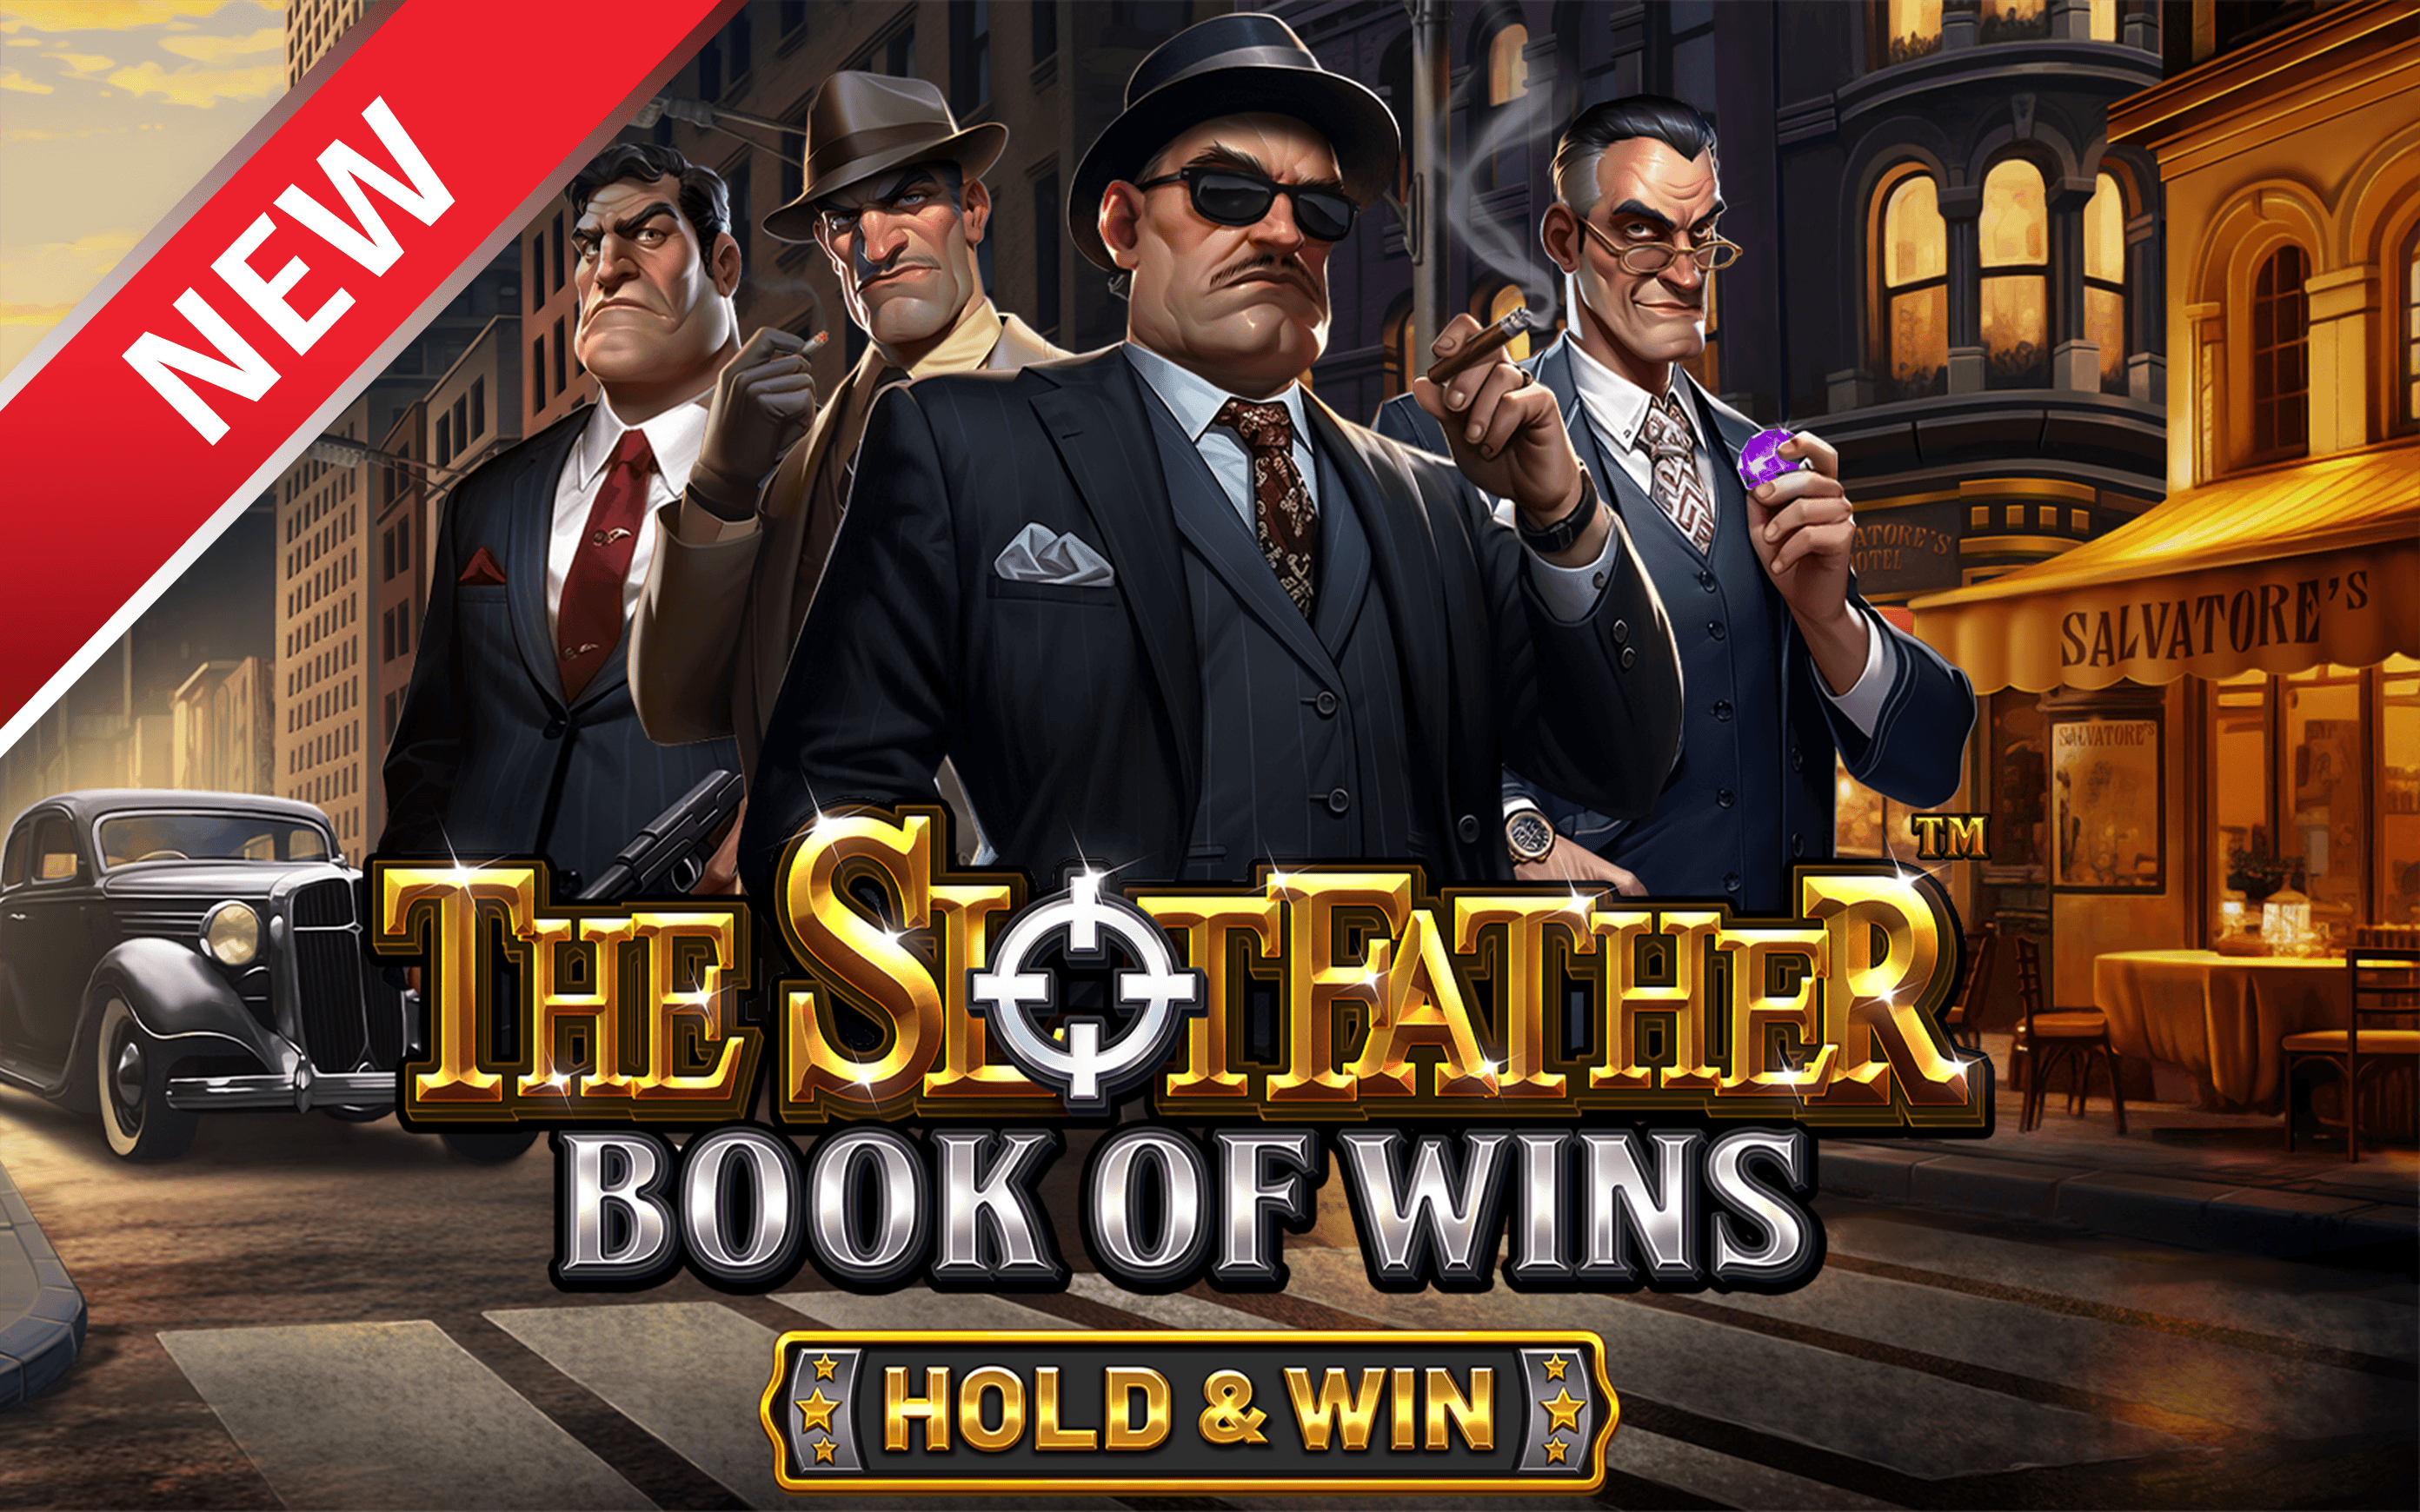 Gioca a The Slotfather: Book of Wins - Hold & Win™ sul casino online Starcasino.be